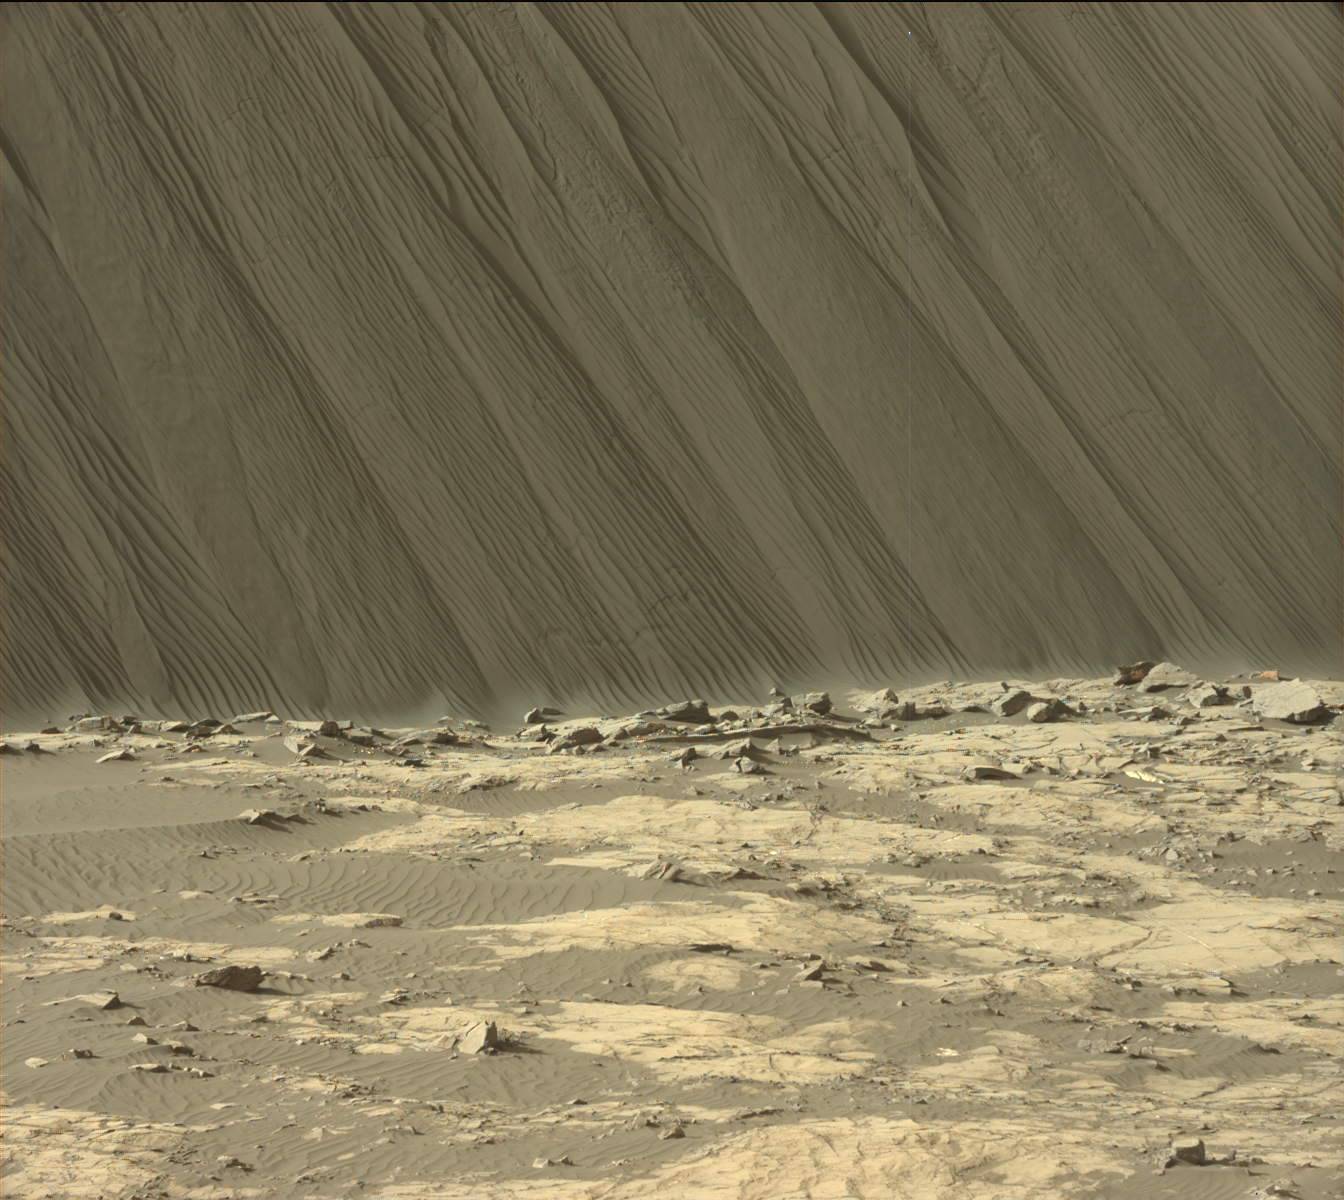 Sol 1194 Mastcam Namib Dune slipface